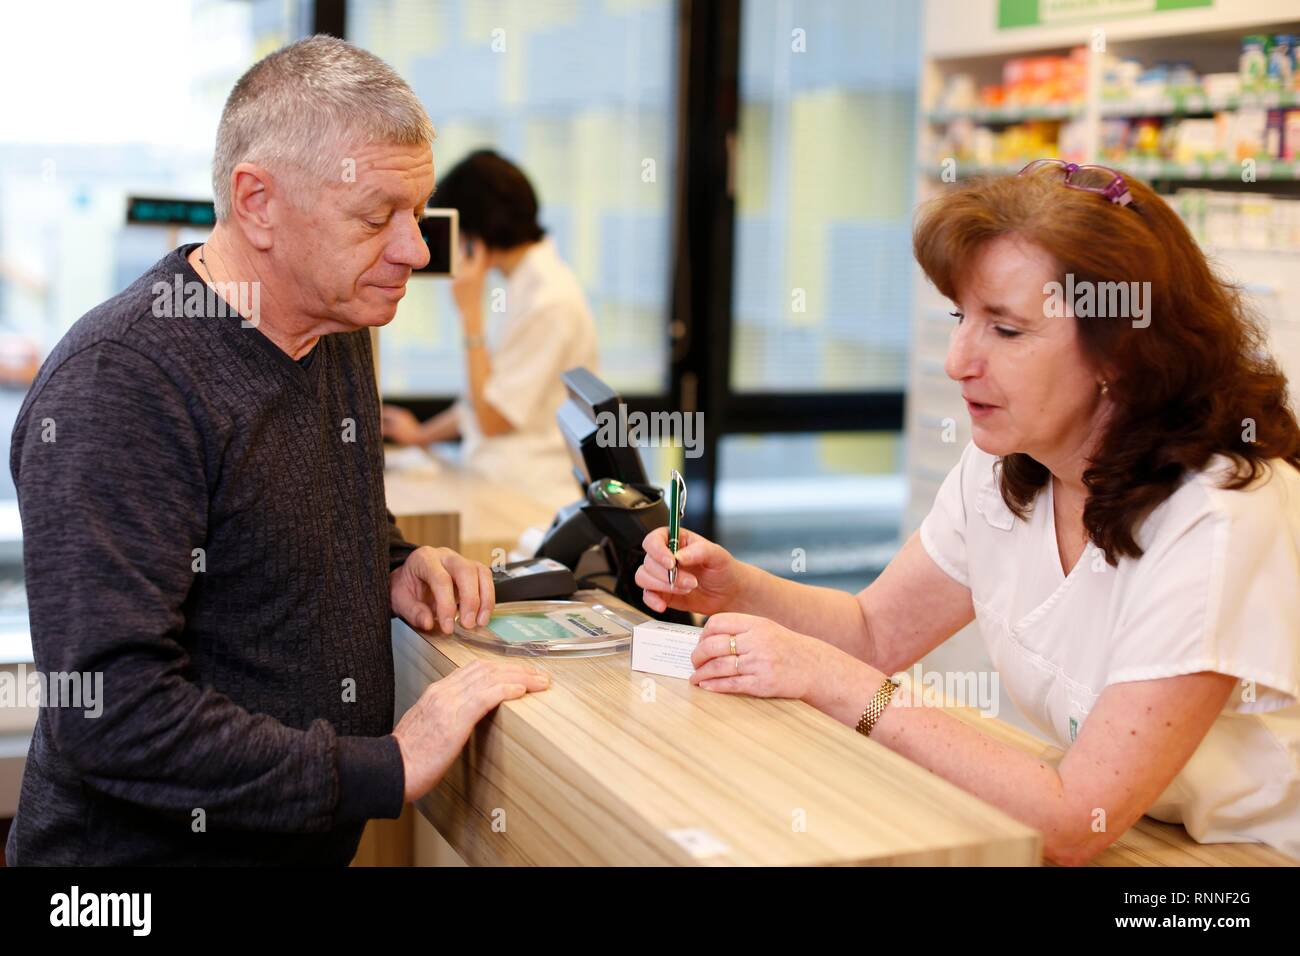 Customer advised by pharmacist in pharmacy, Czech Republic Stock Photo